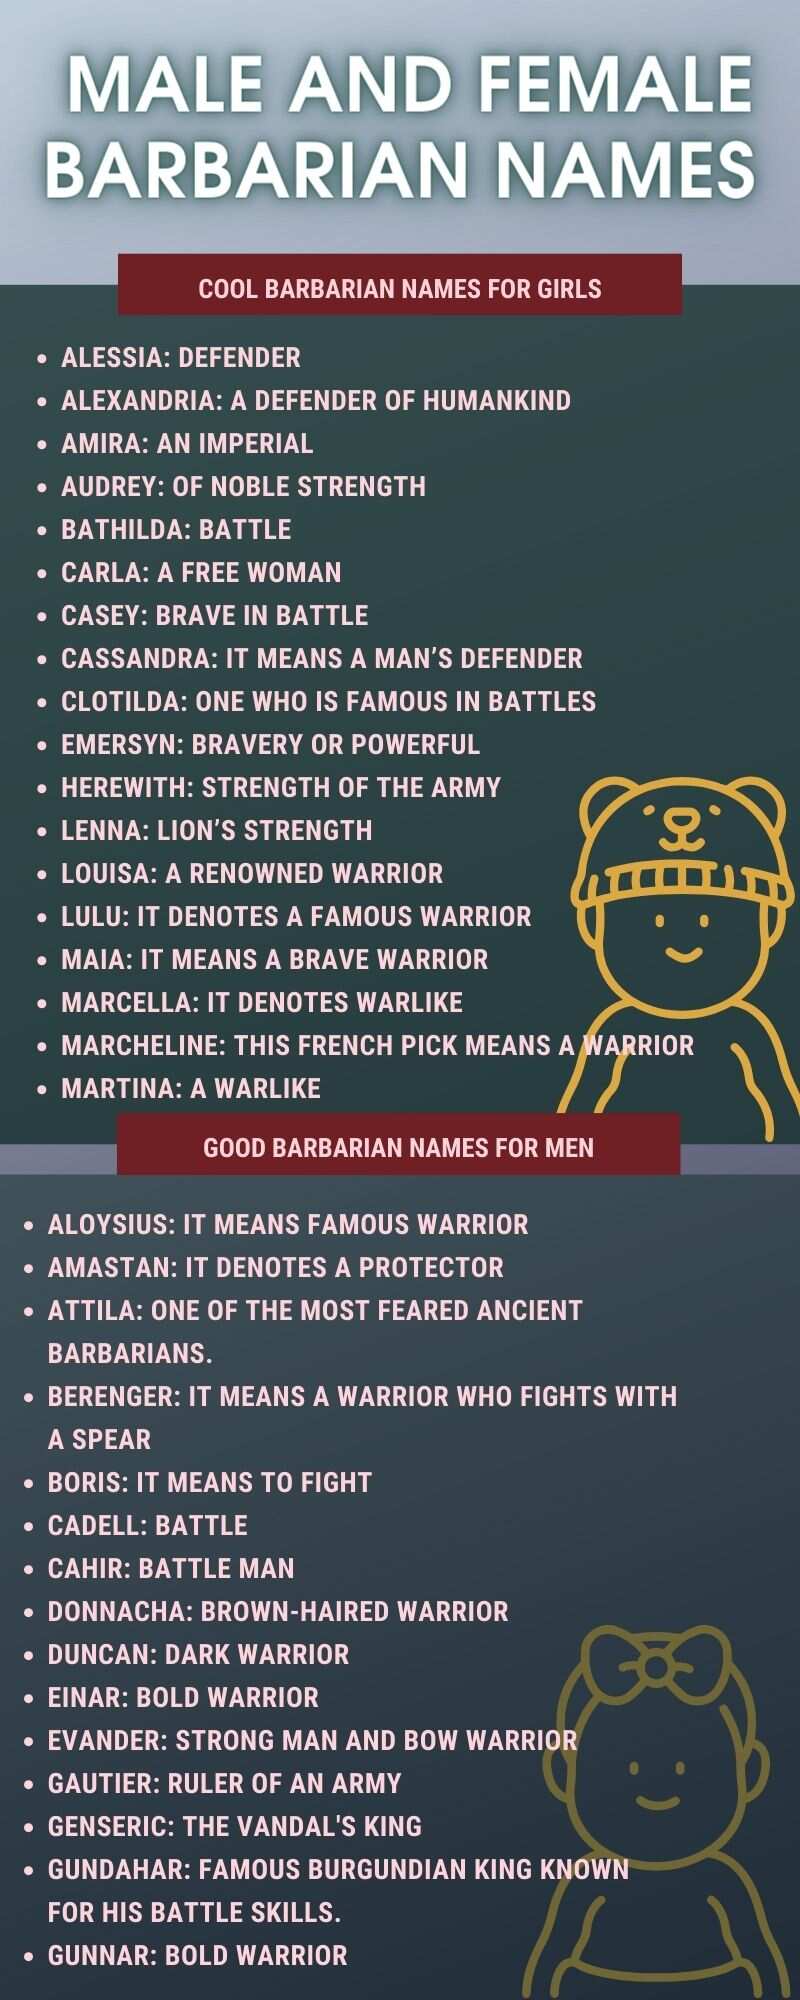 Male and female barbarian names